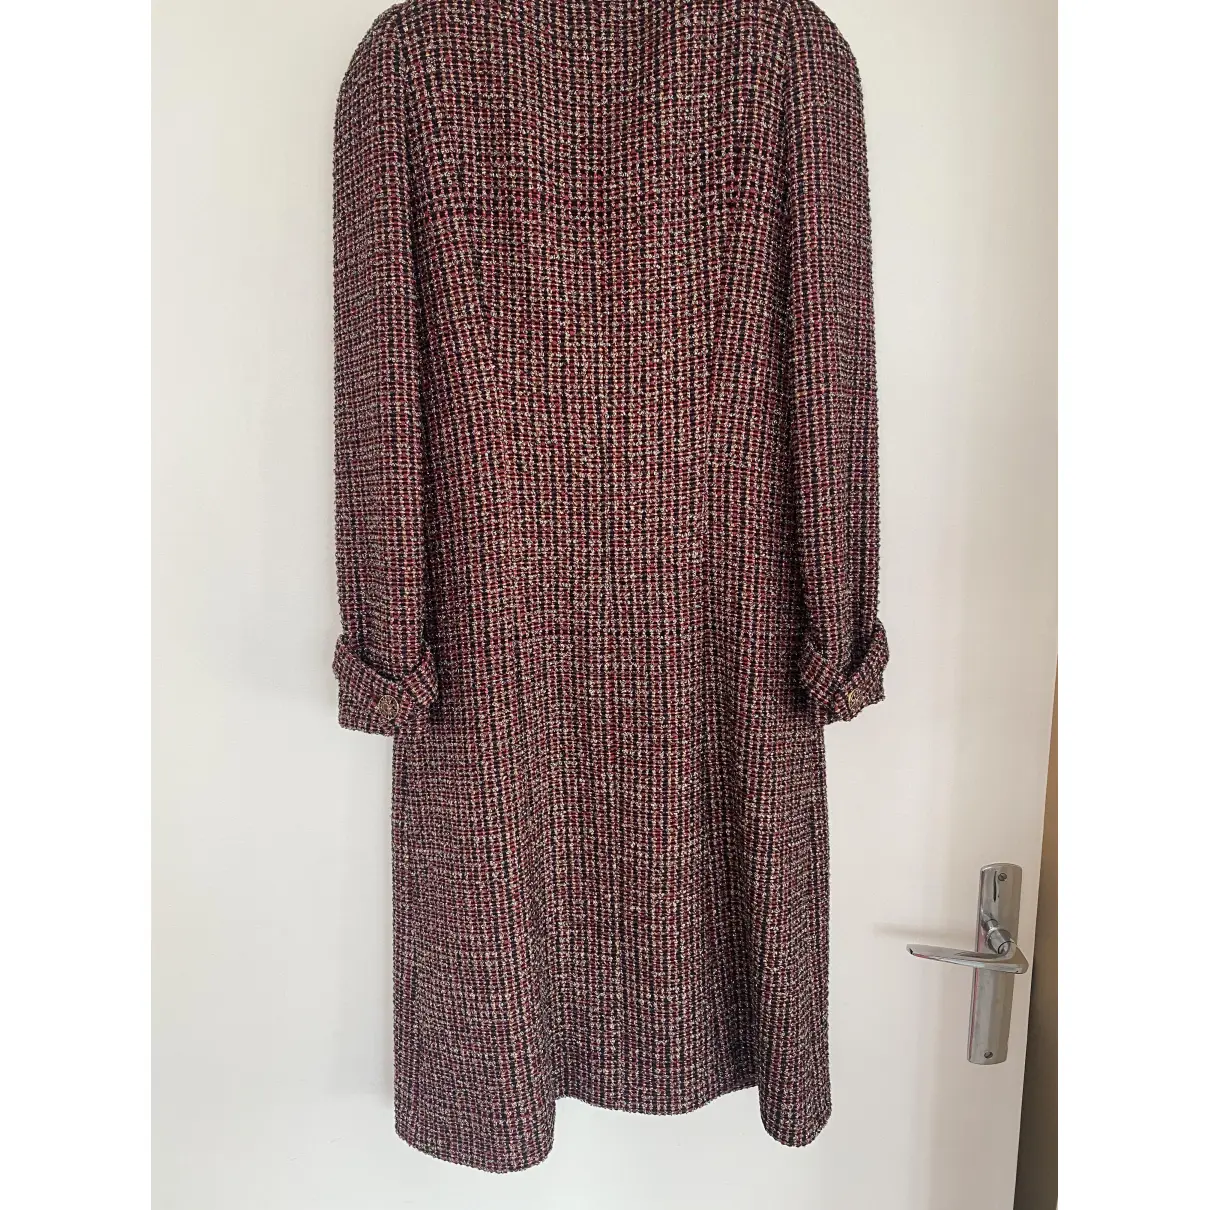 Buy Chanel Tweed mid-length dress online